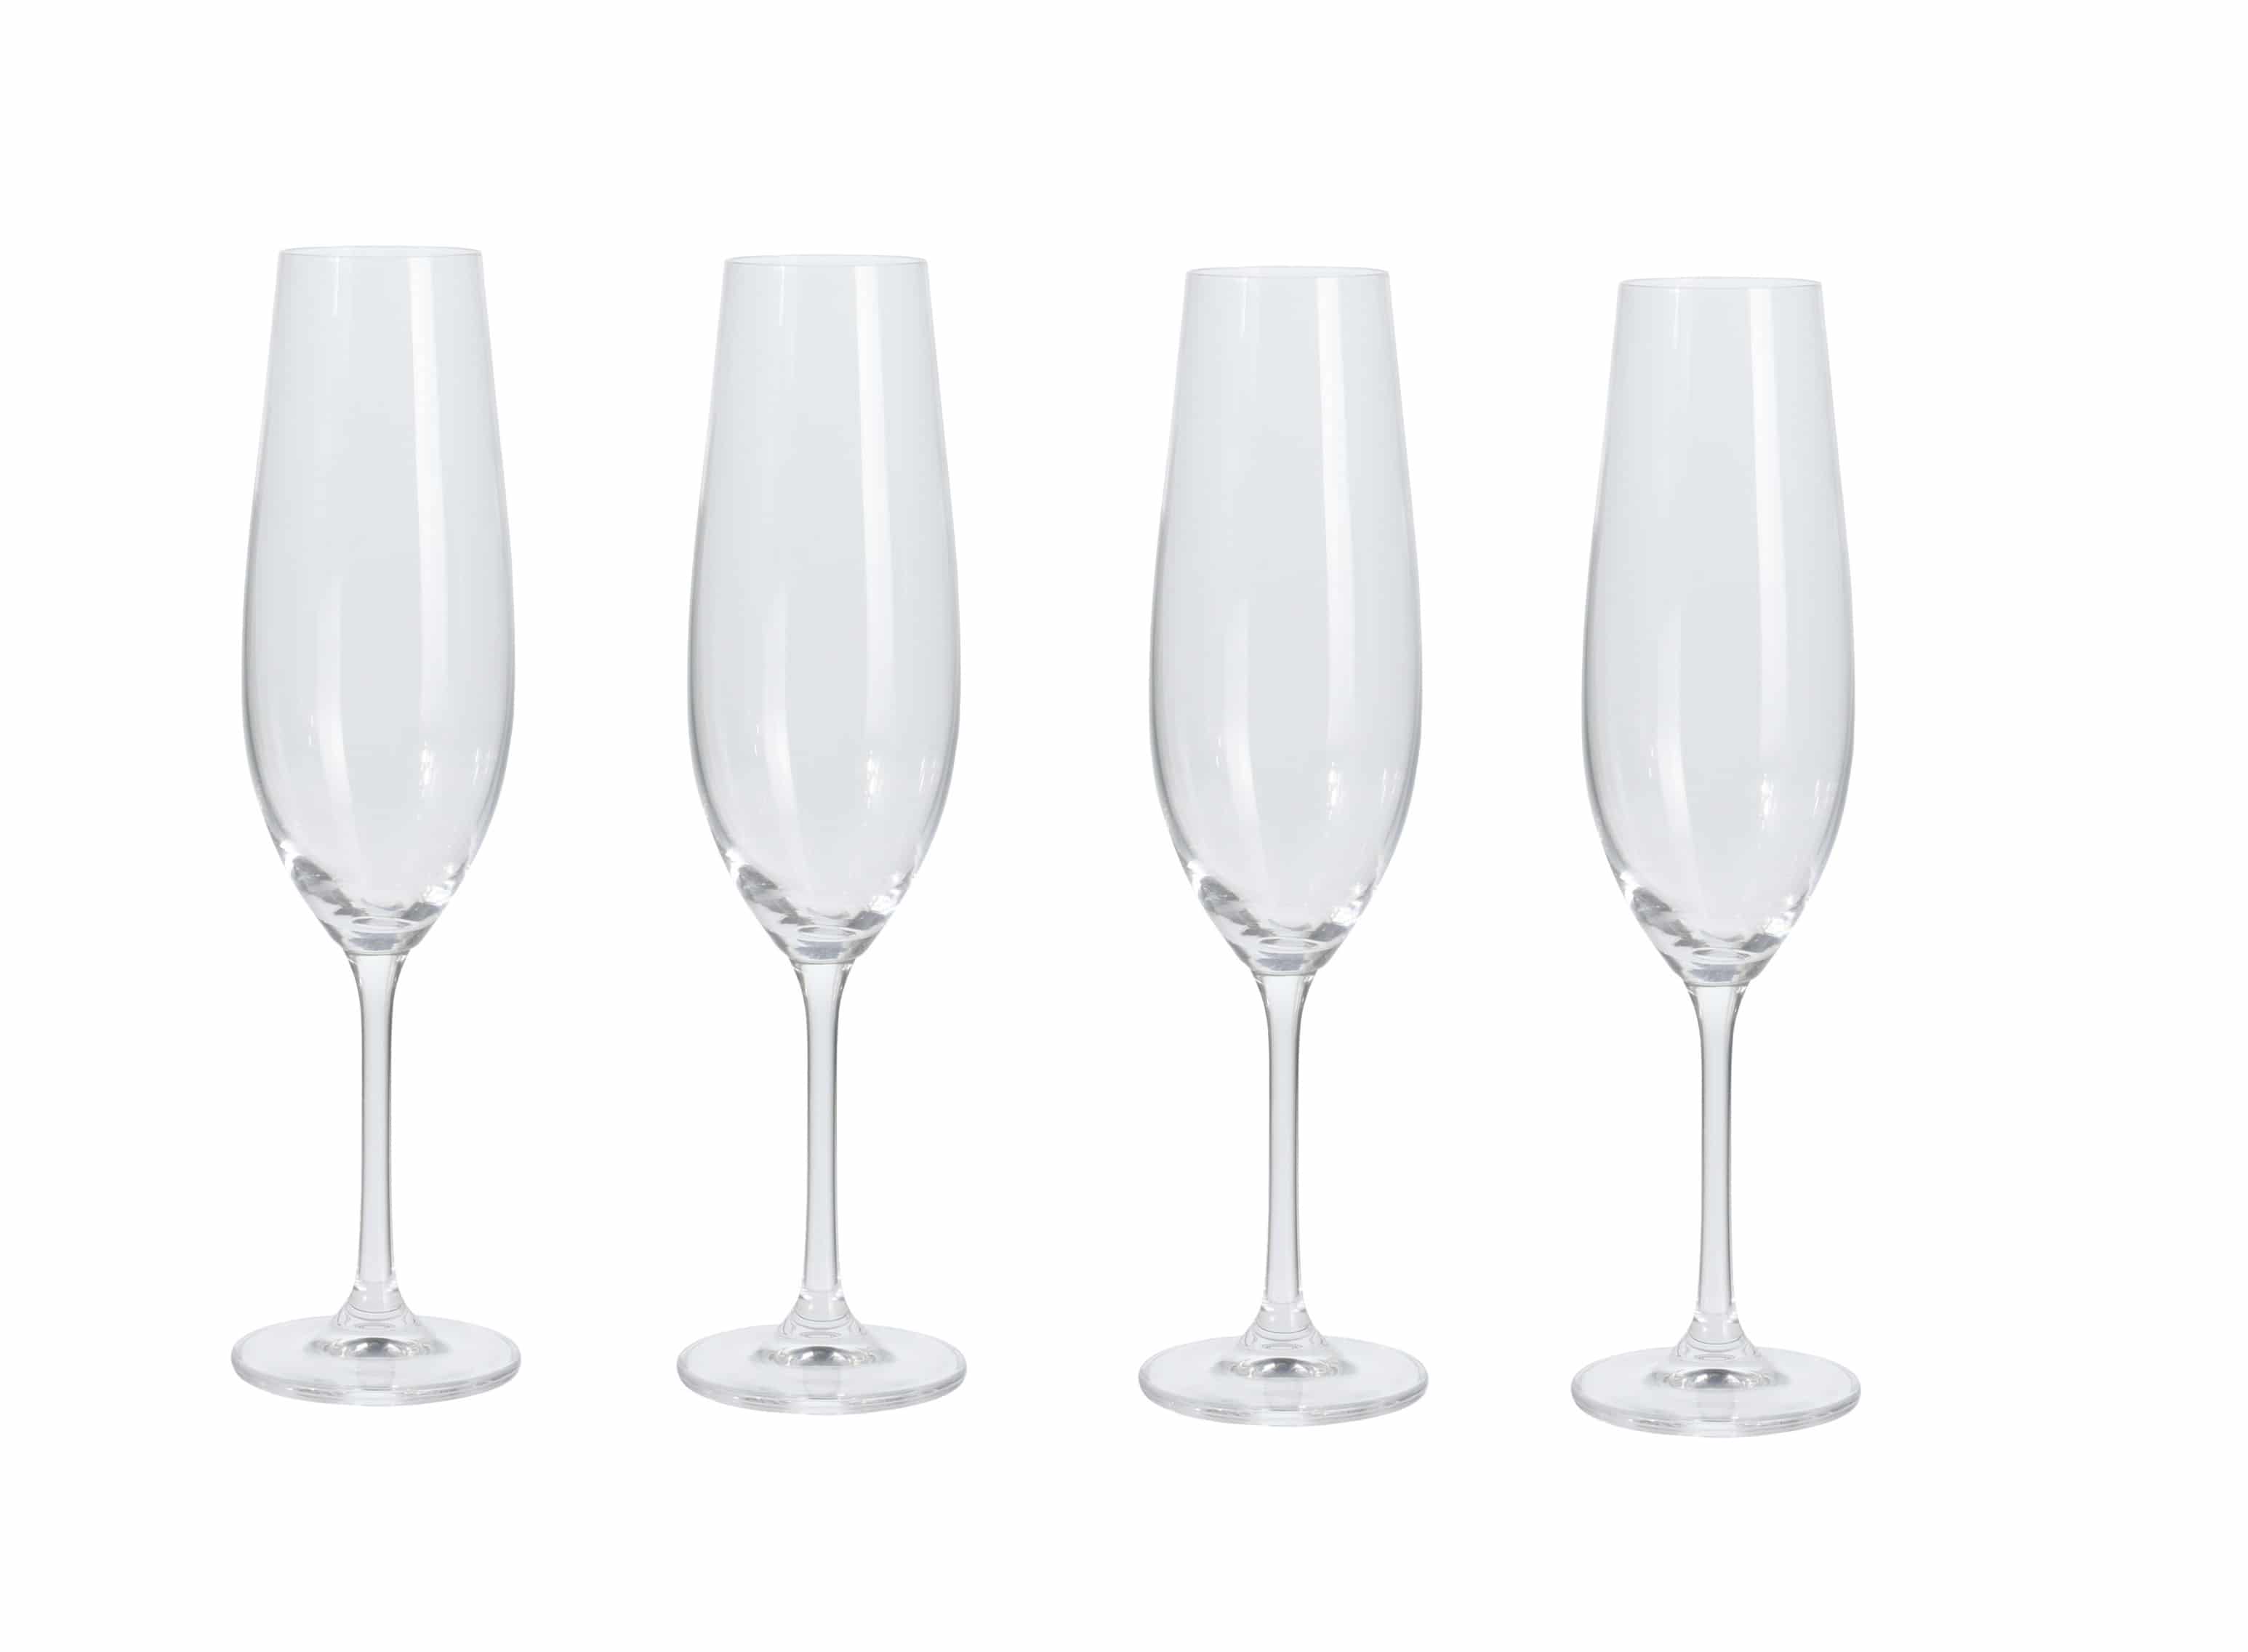 4goodz set van 4 stuks kristalglas Champagne Flutes - inhoud 260 ml